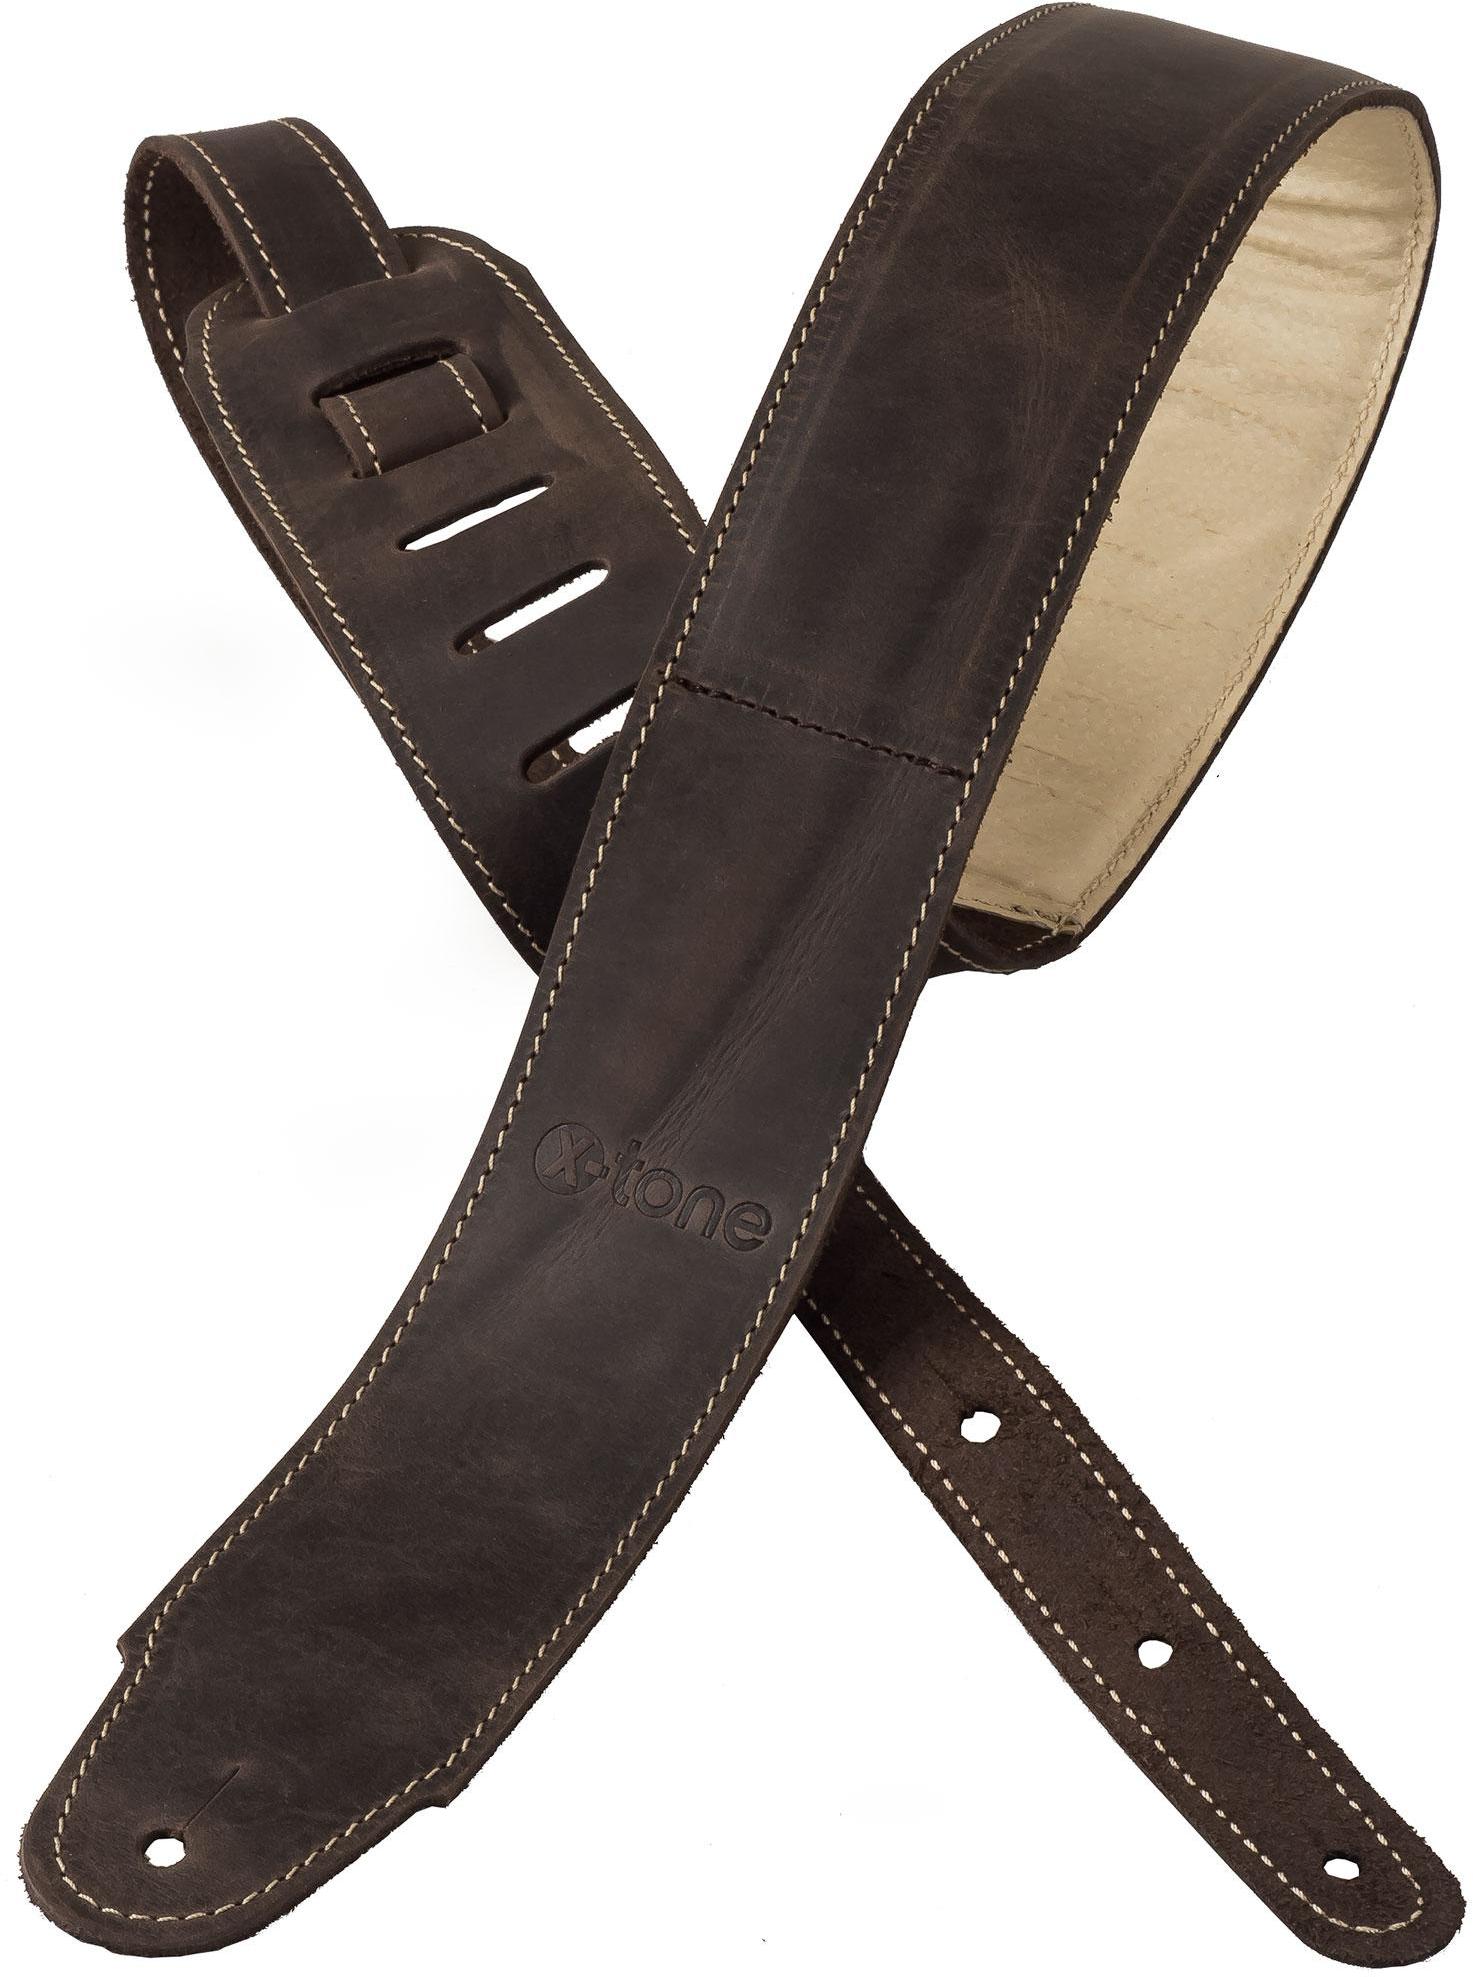 Guitar strap X-tone xg 3156 Classic Plus Leather Guitar Strap - Dark Brown